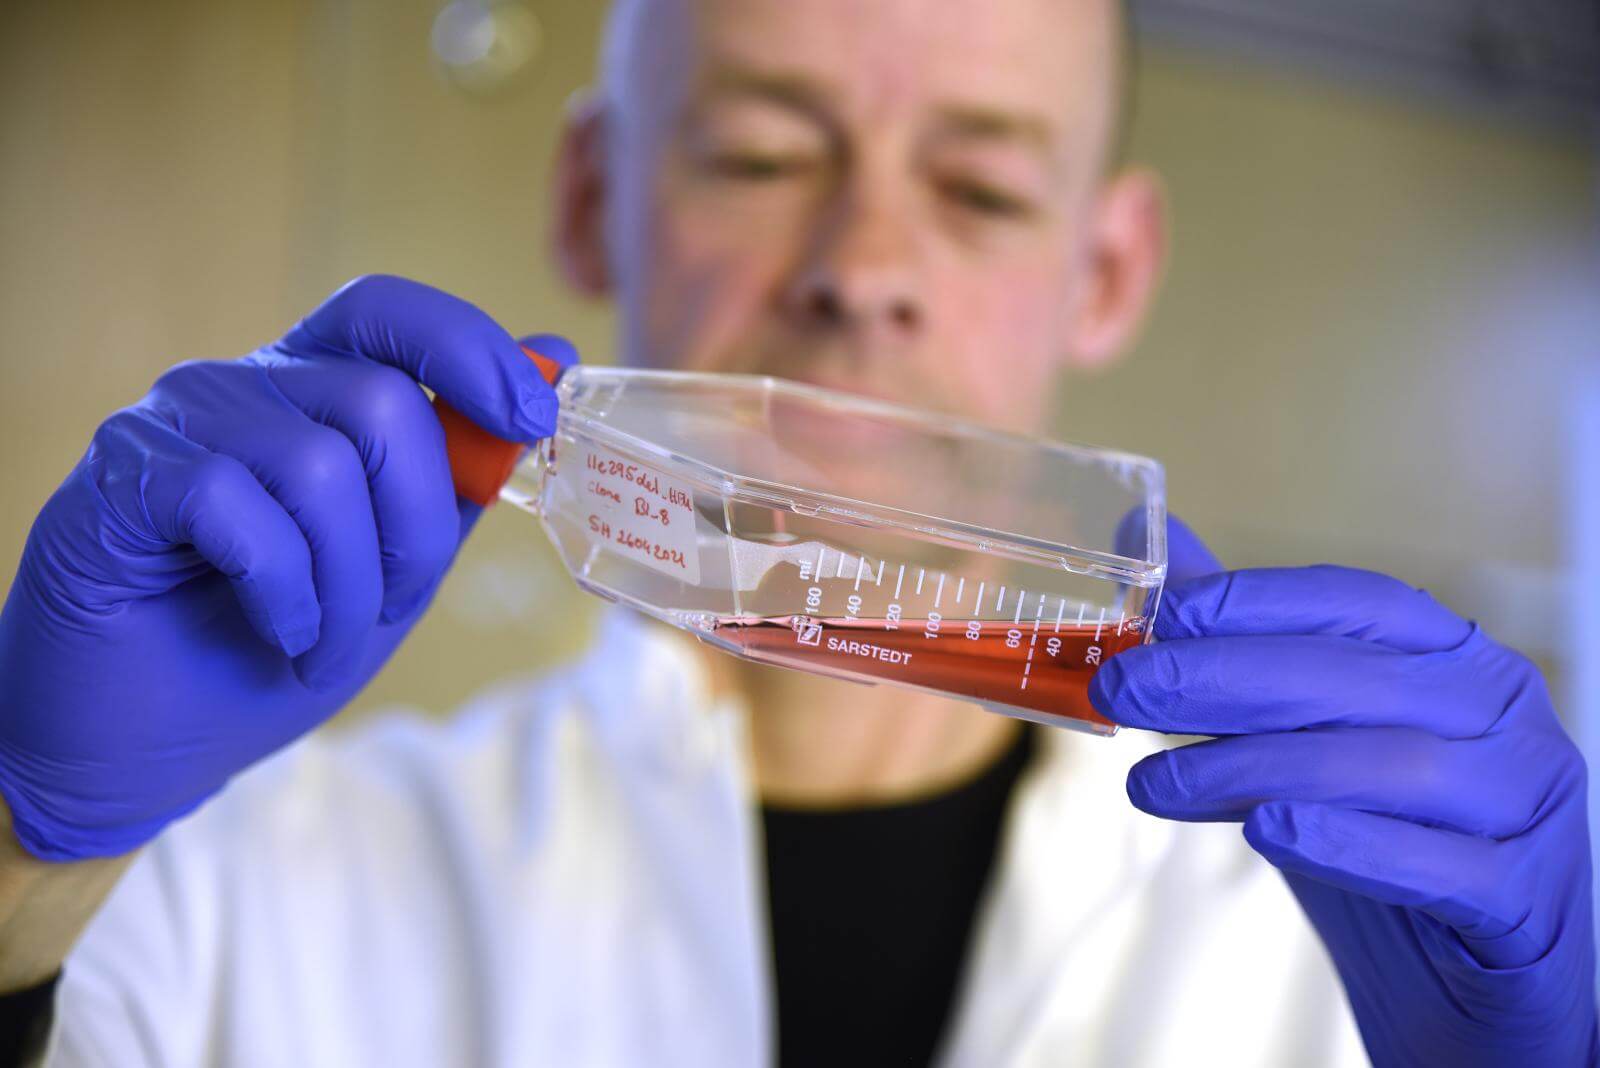 Thomas holder en beholder med rød væske, som er næringsvæske for celler